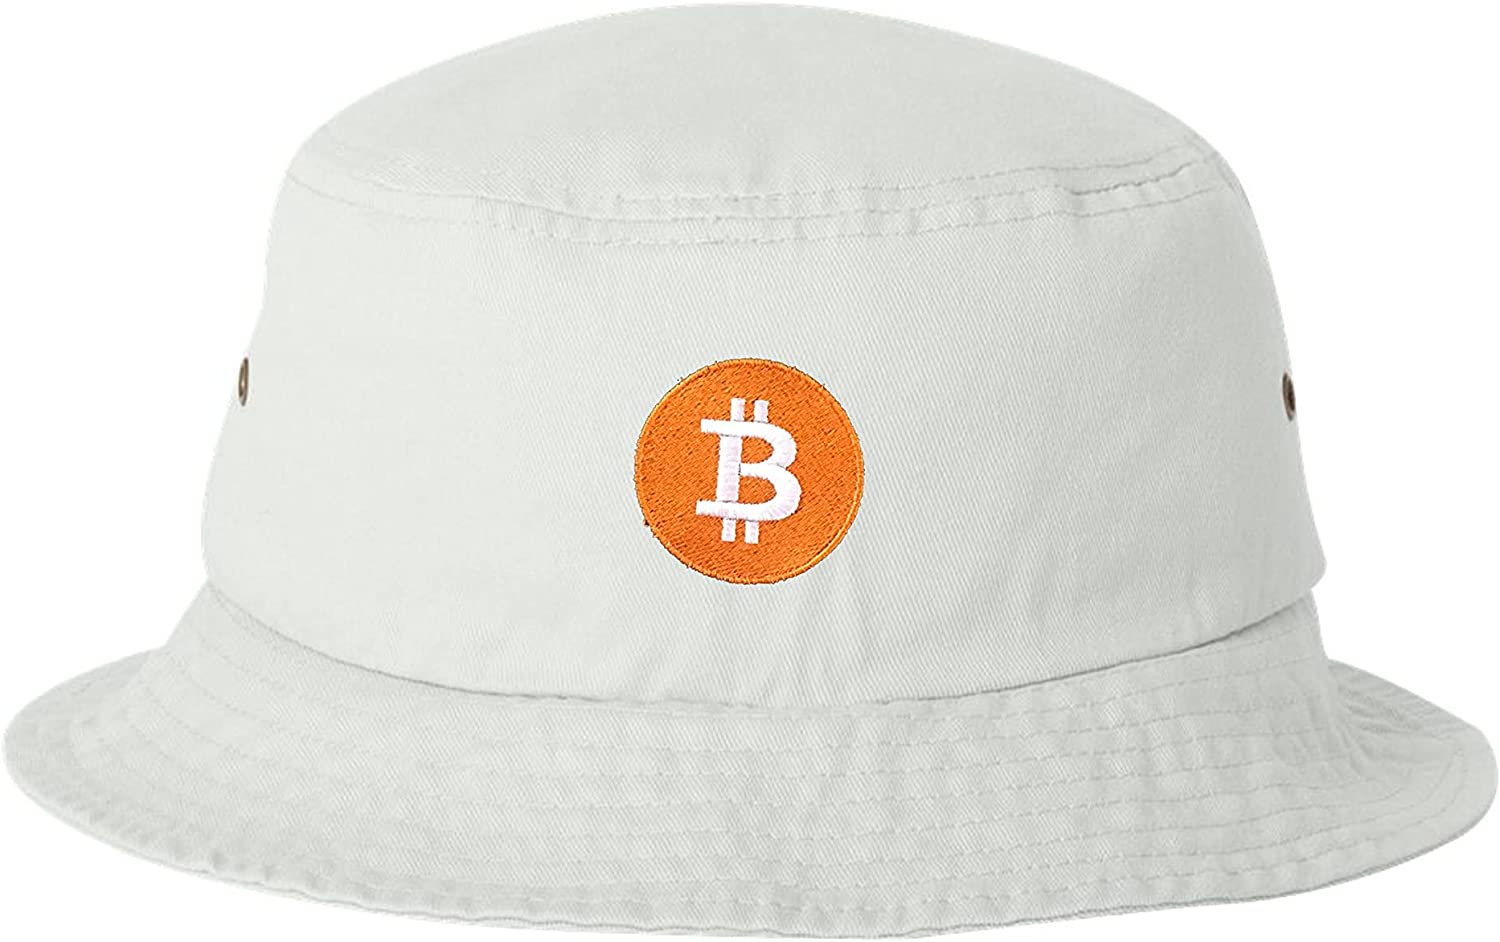 A white Bitcoin Bucket Hat